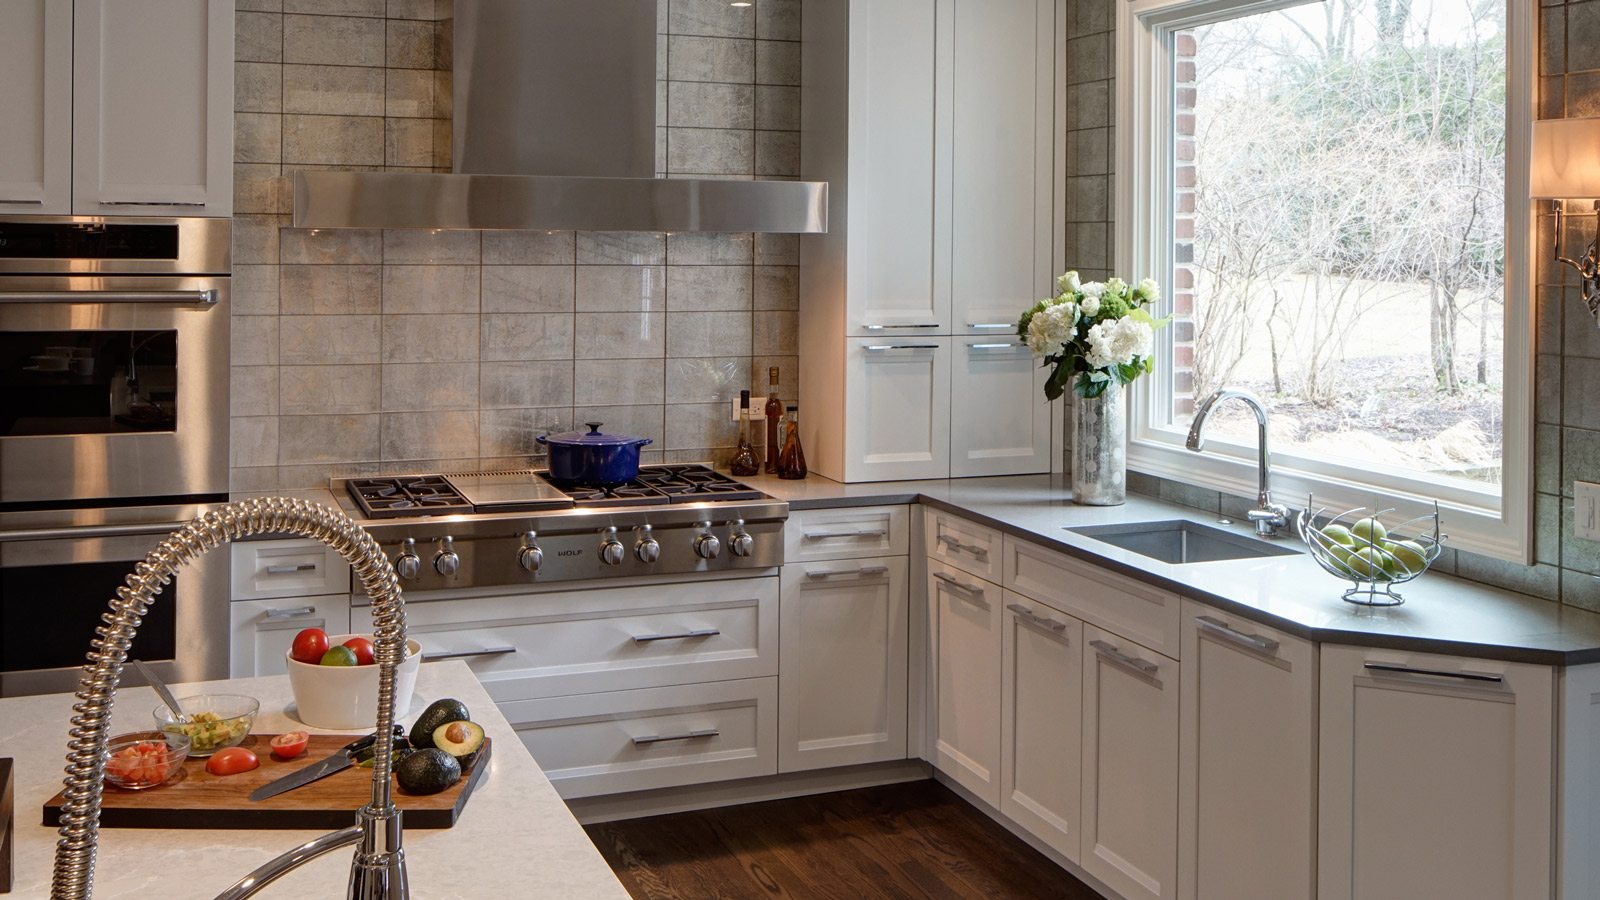 Glen Ellyn suburban kitchen design with gray backsplash